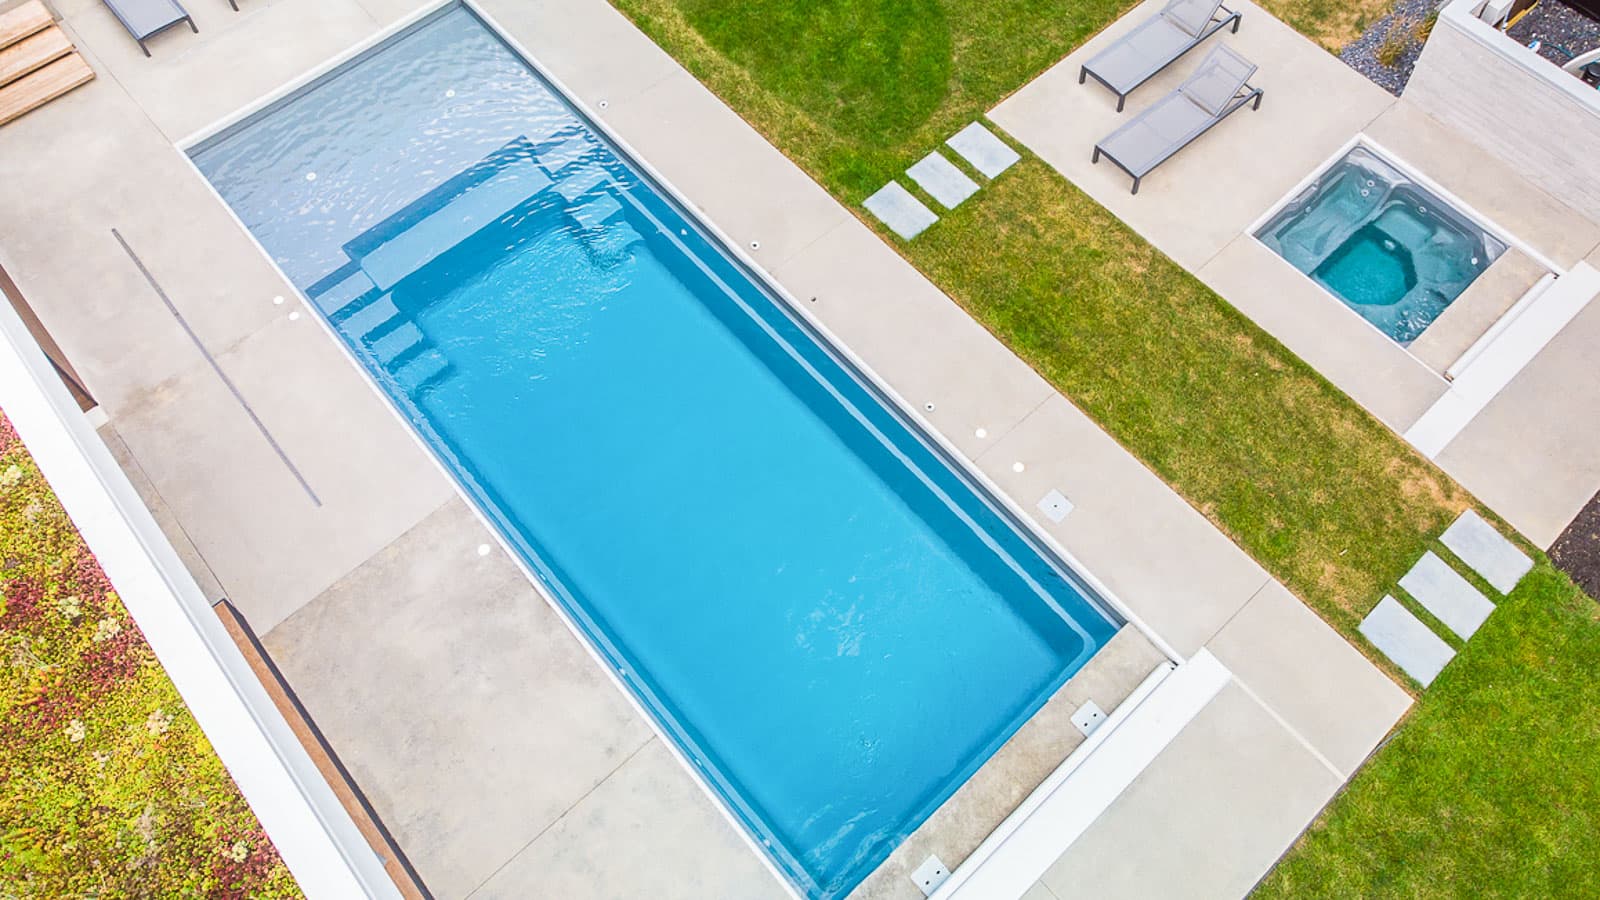 The Imagine Pools Freedom with Splash Pad fibreglass swimming pool